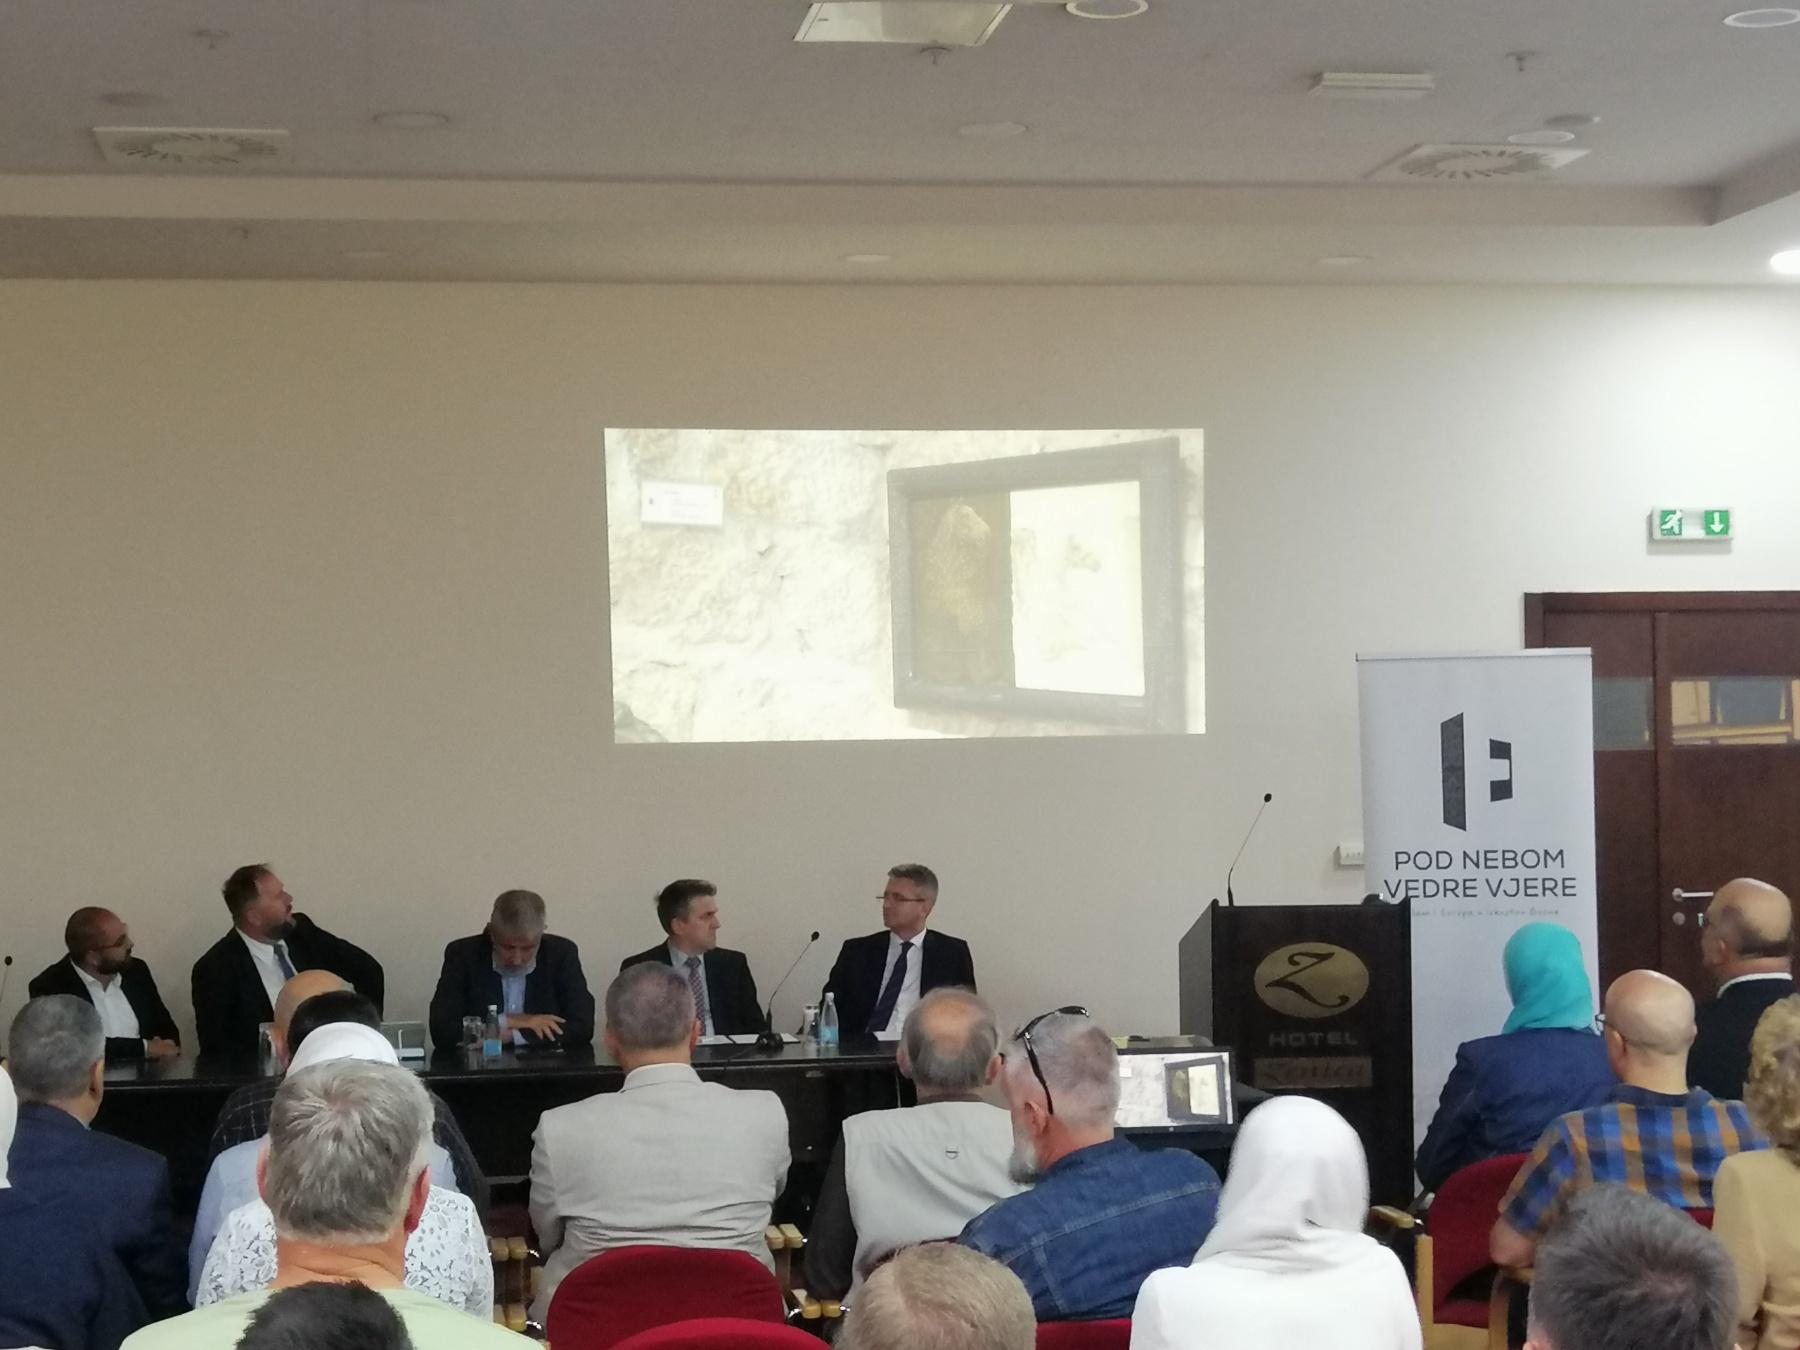 Projekat "Pod nebom vedre vjere - Islam i Evropa u iskustvu Bosne" - Avaz